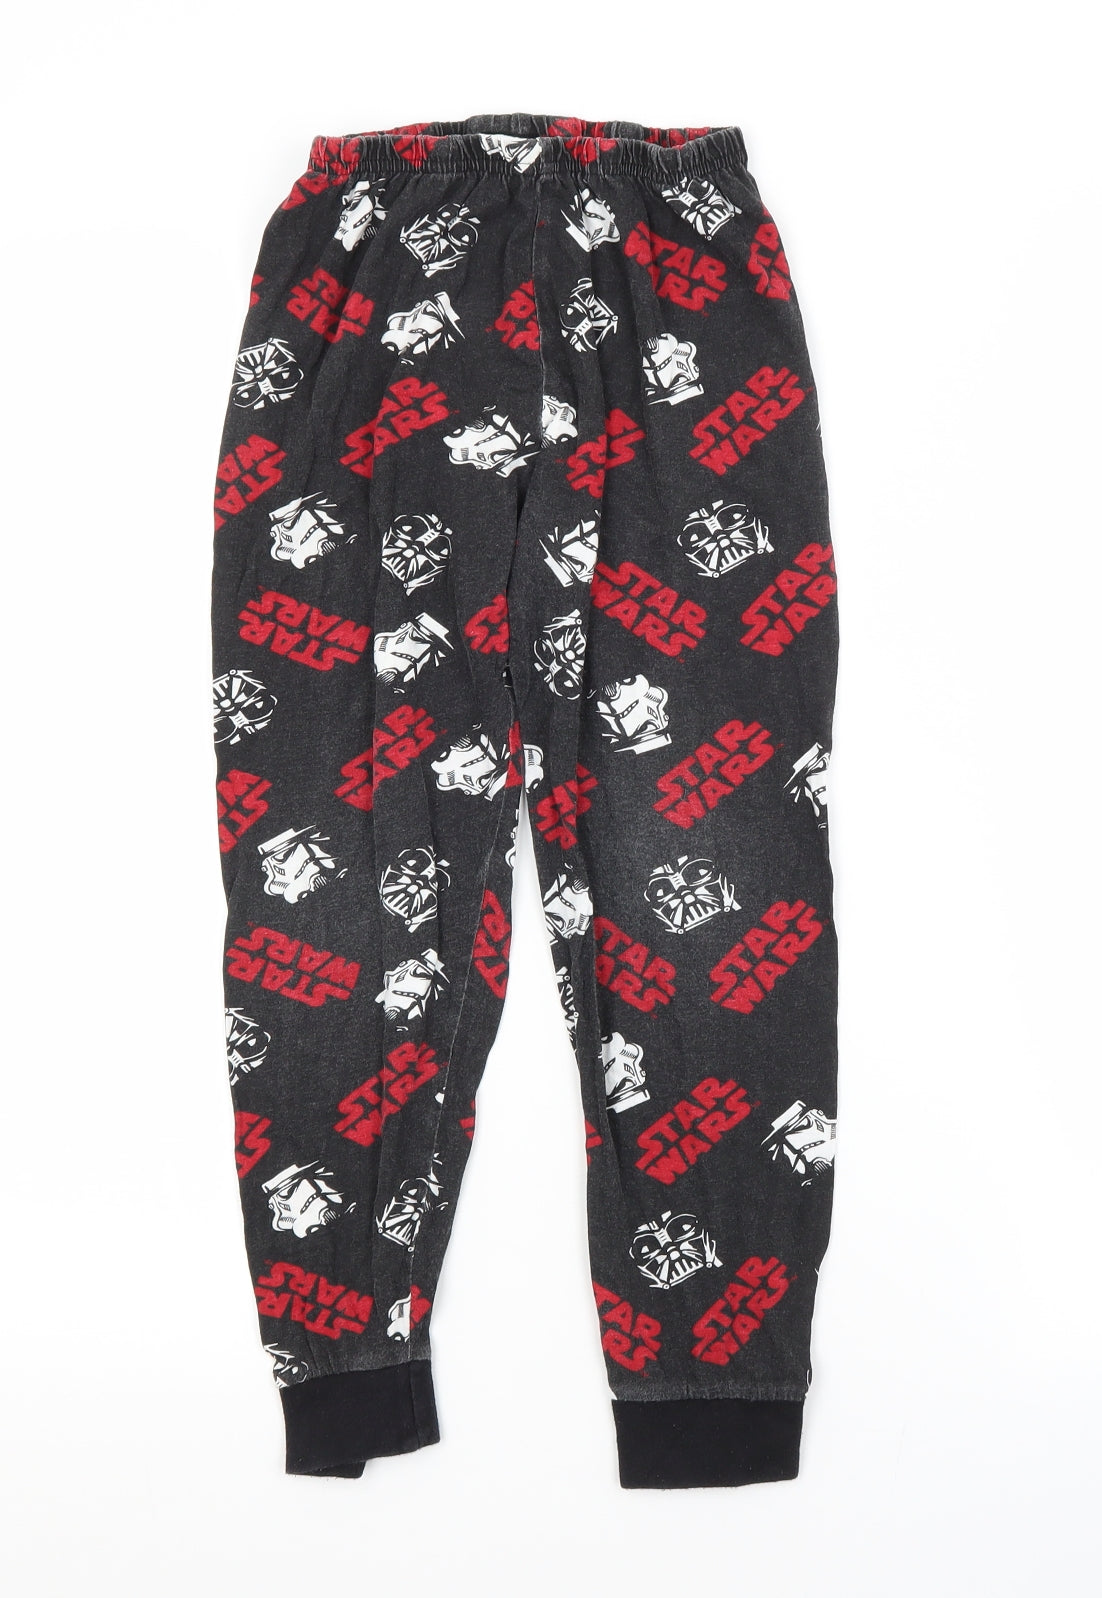 Primark Boys Black Geometric Cotton  Pyjama Pants Size 7-8 Years   - STAR WARS